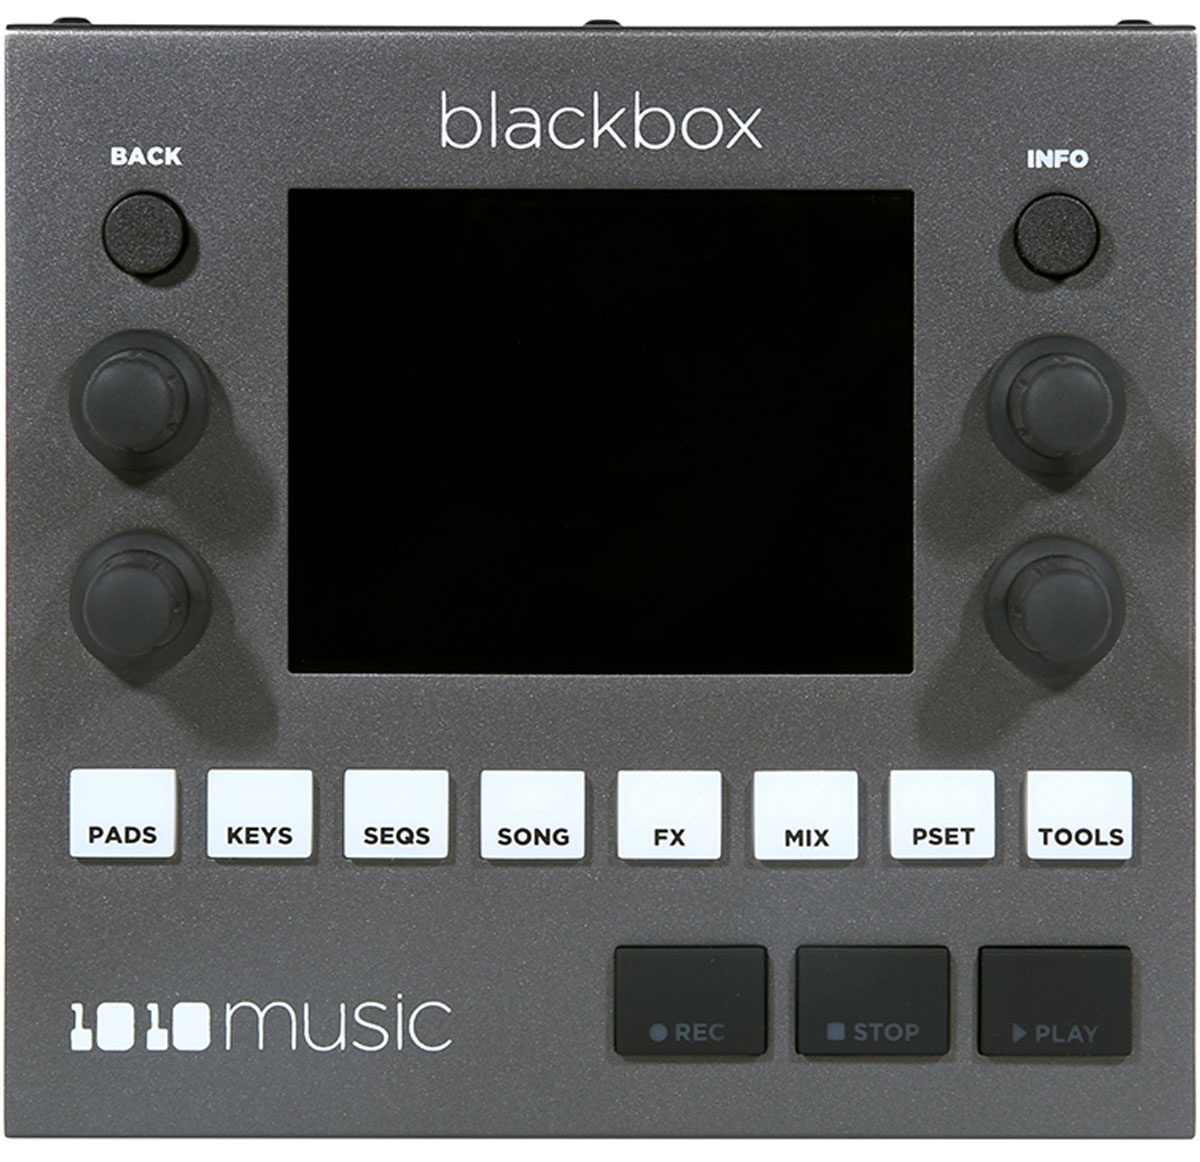 1010music Blackbox по цене 90 000 ₽